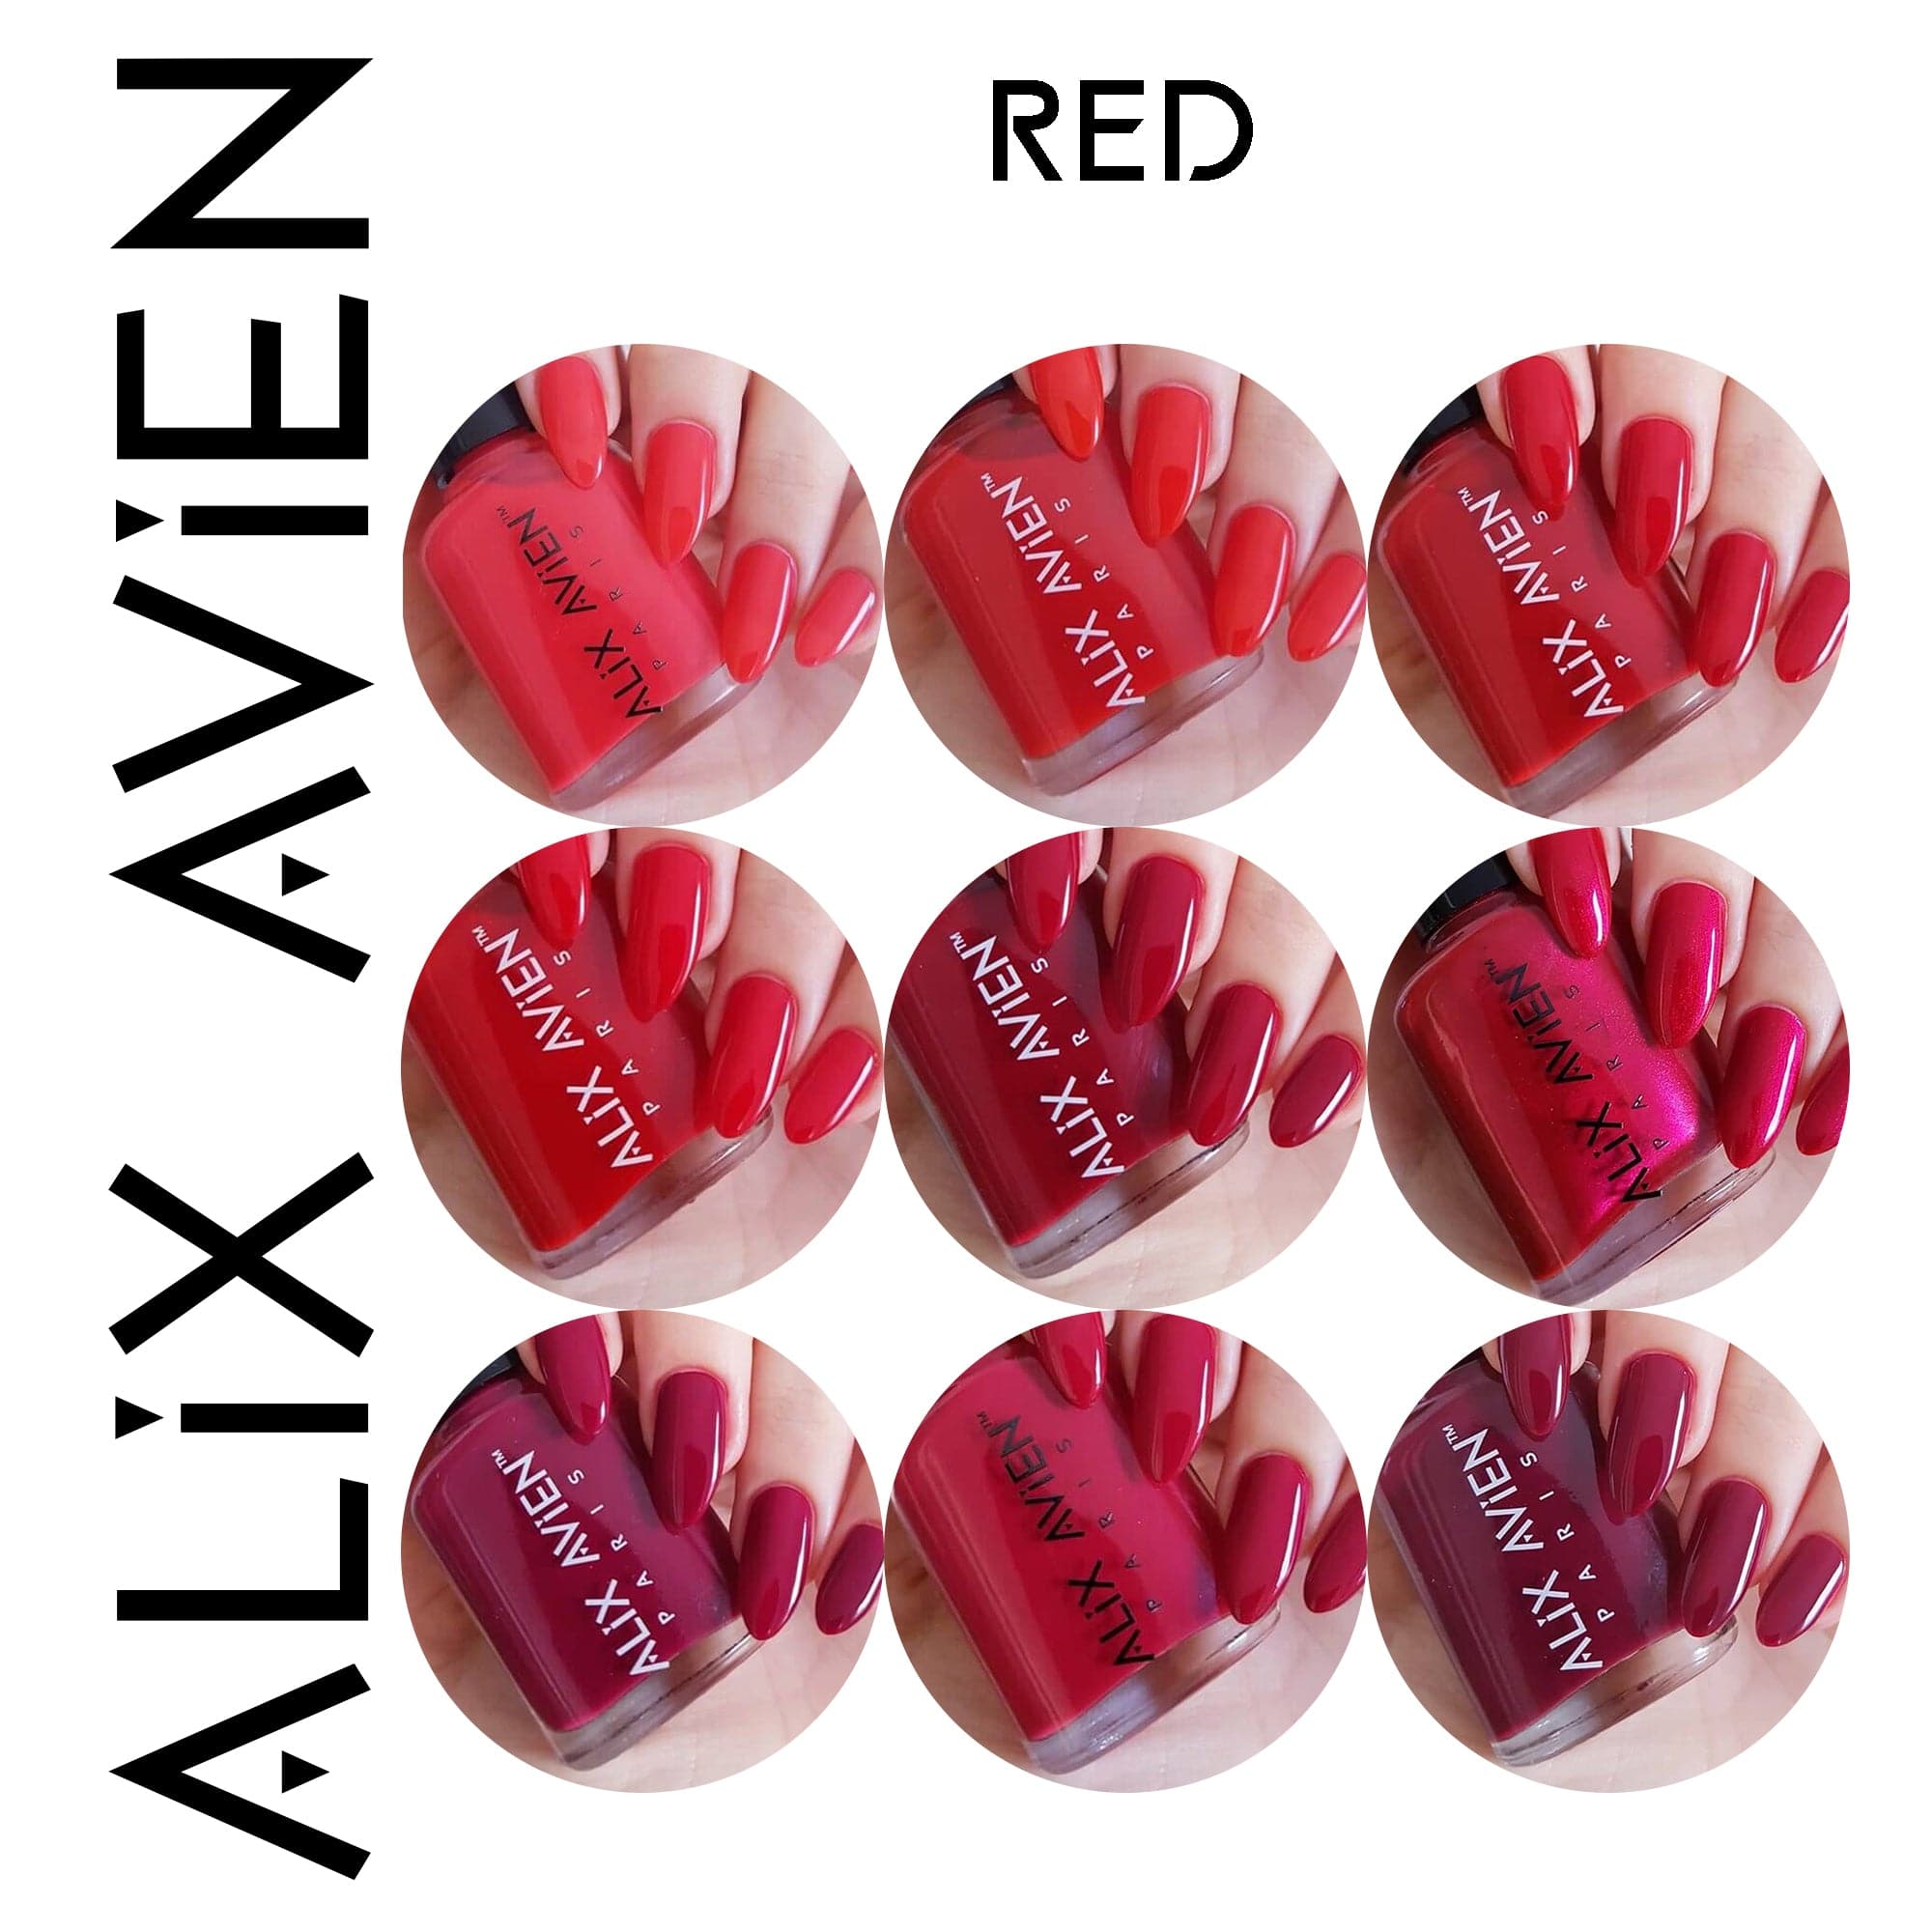 Alix Avien - Nail Polish No.105 (Metallic Red) - Eson Direct